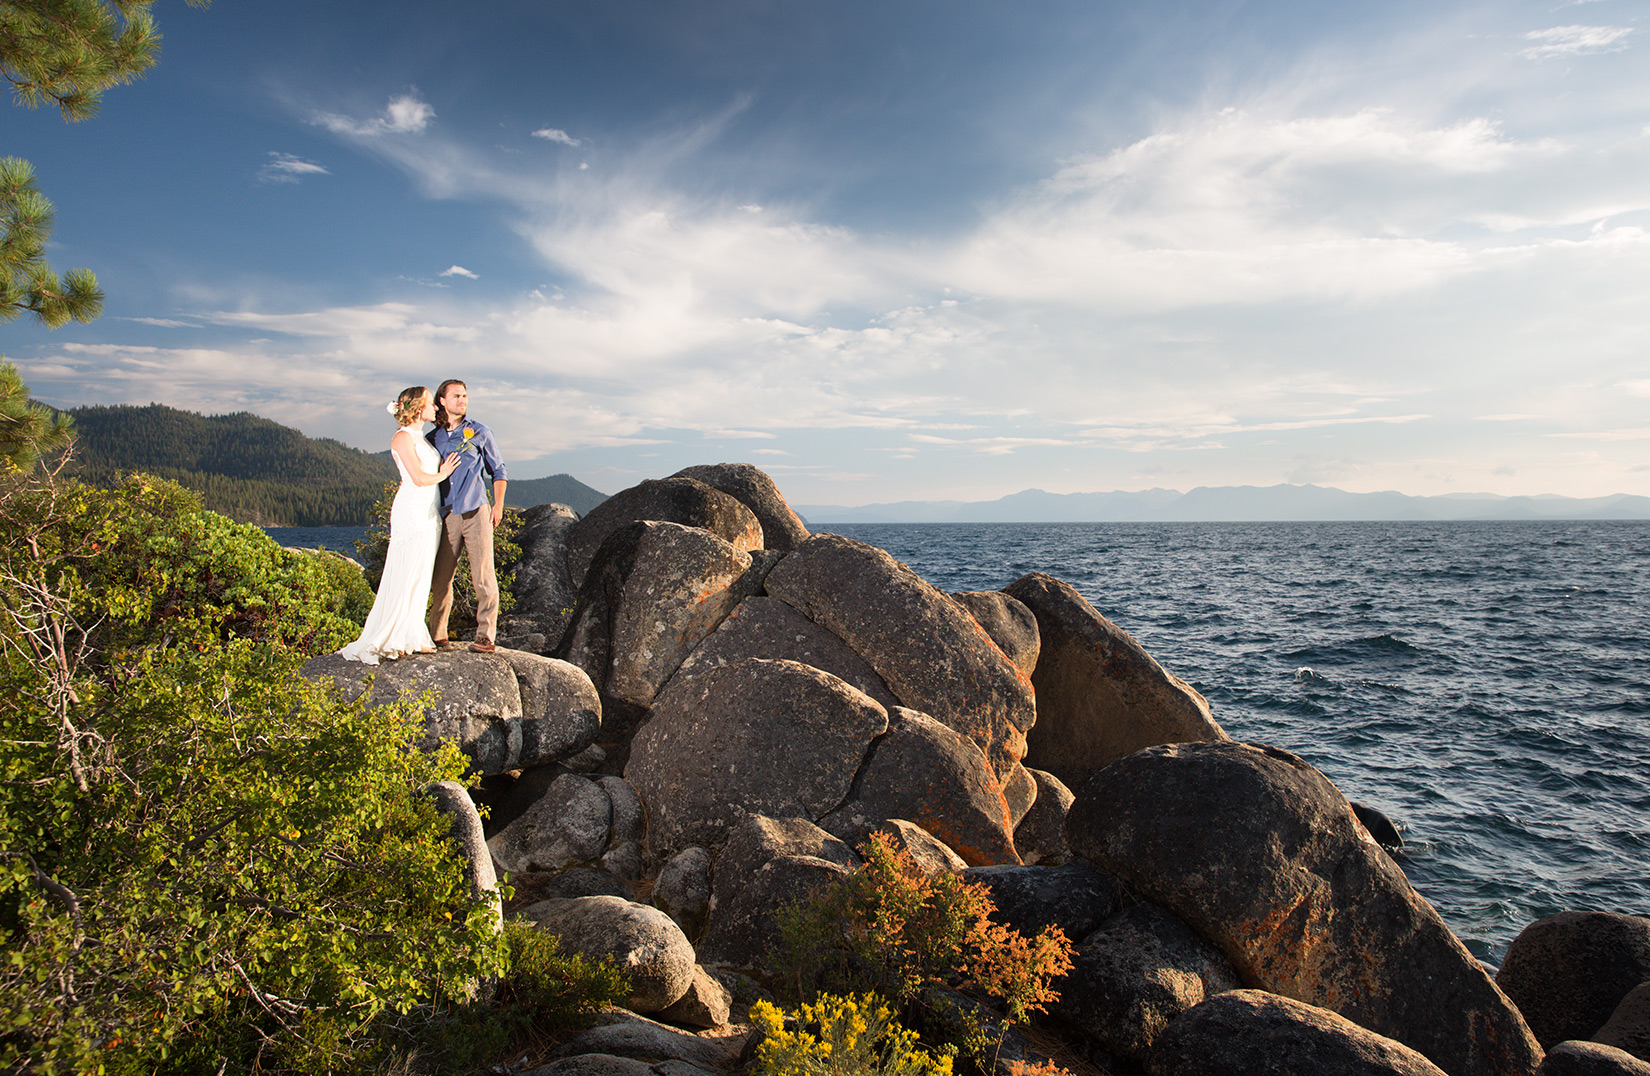 Tahoe-sunset-on-rocks-wedding